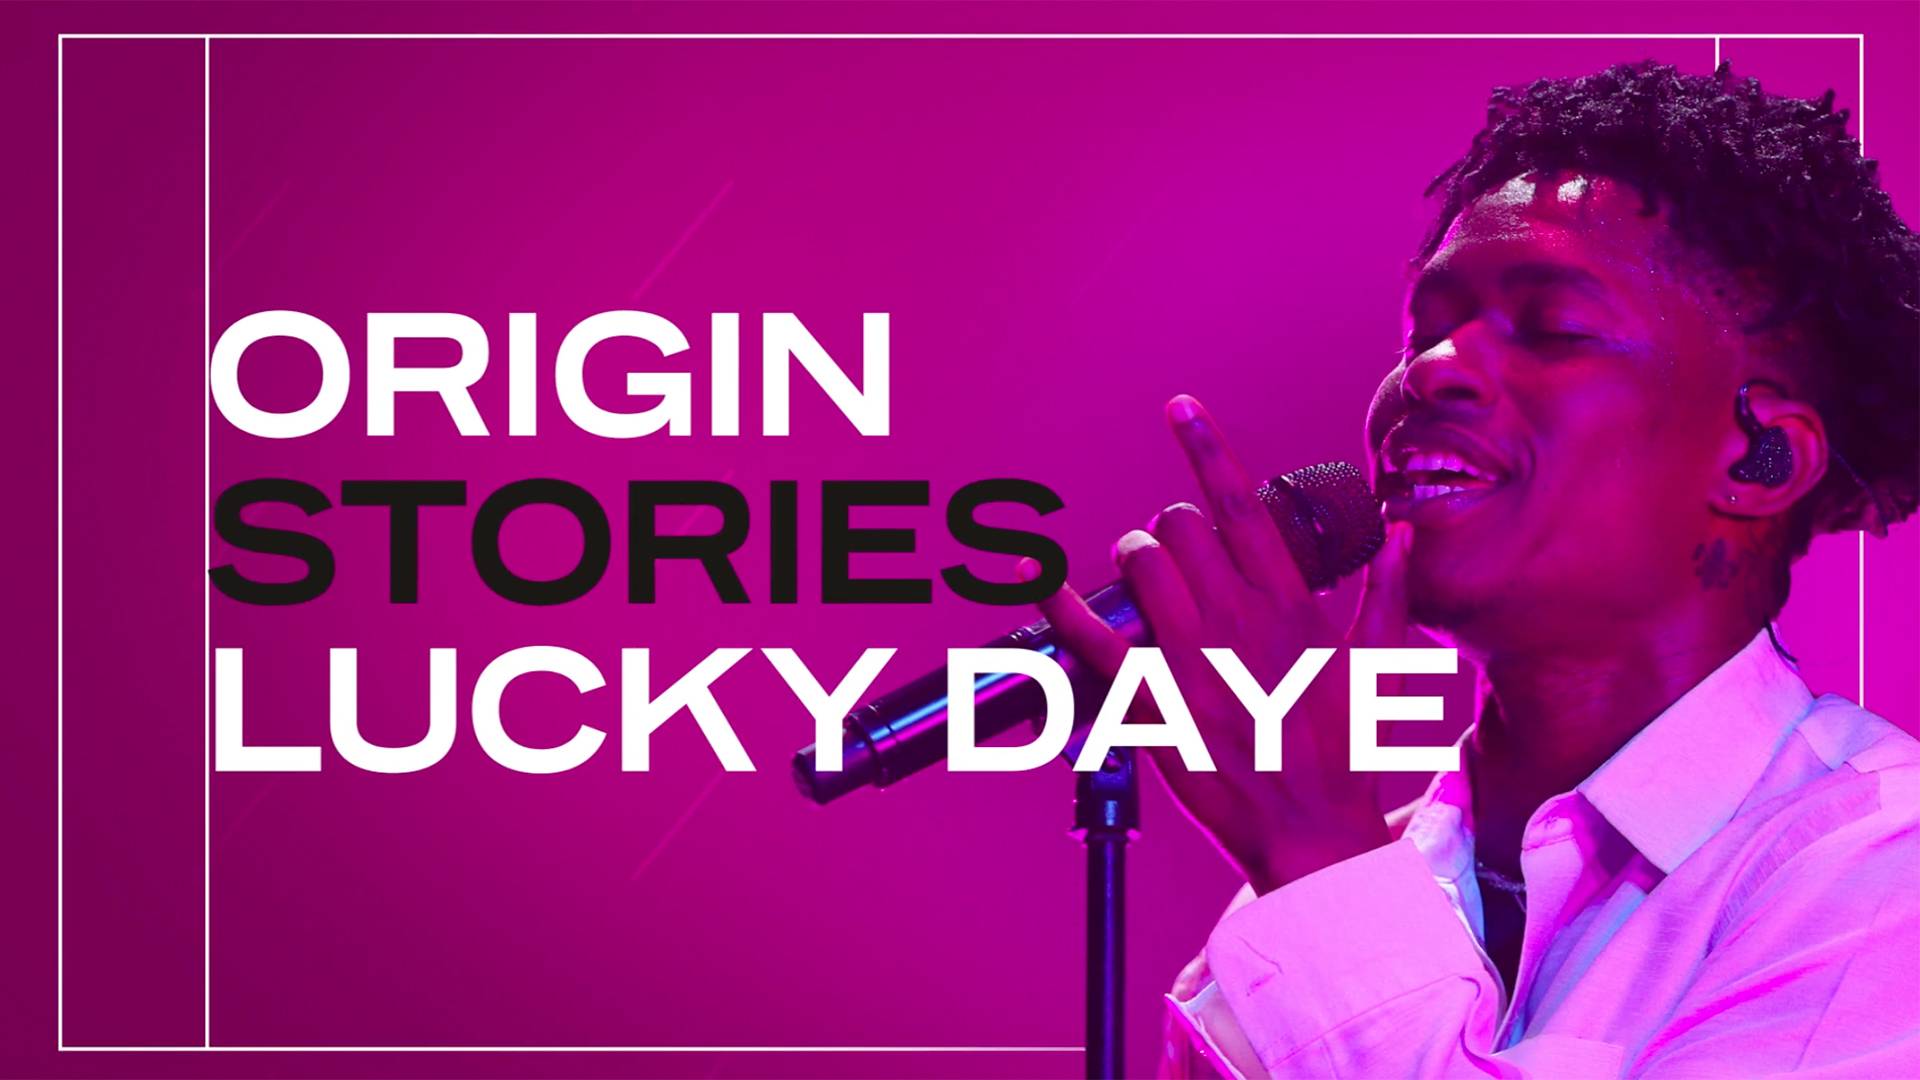 Origin Stories: Lucky Daye for the 2020 BET Awards.